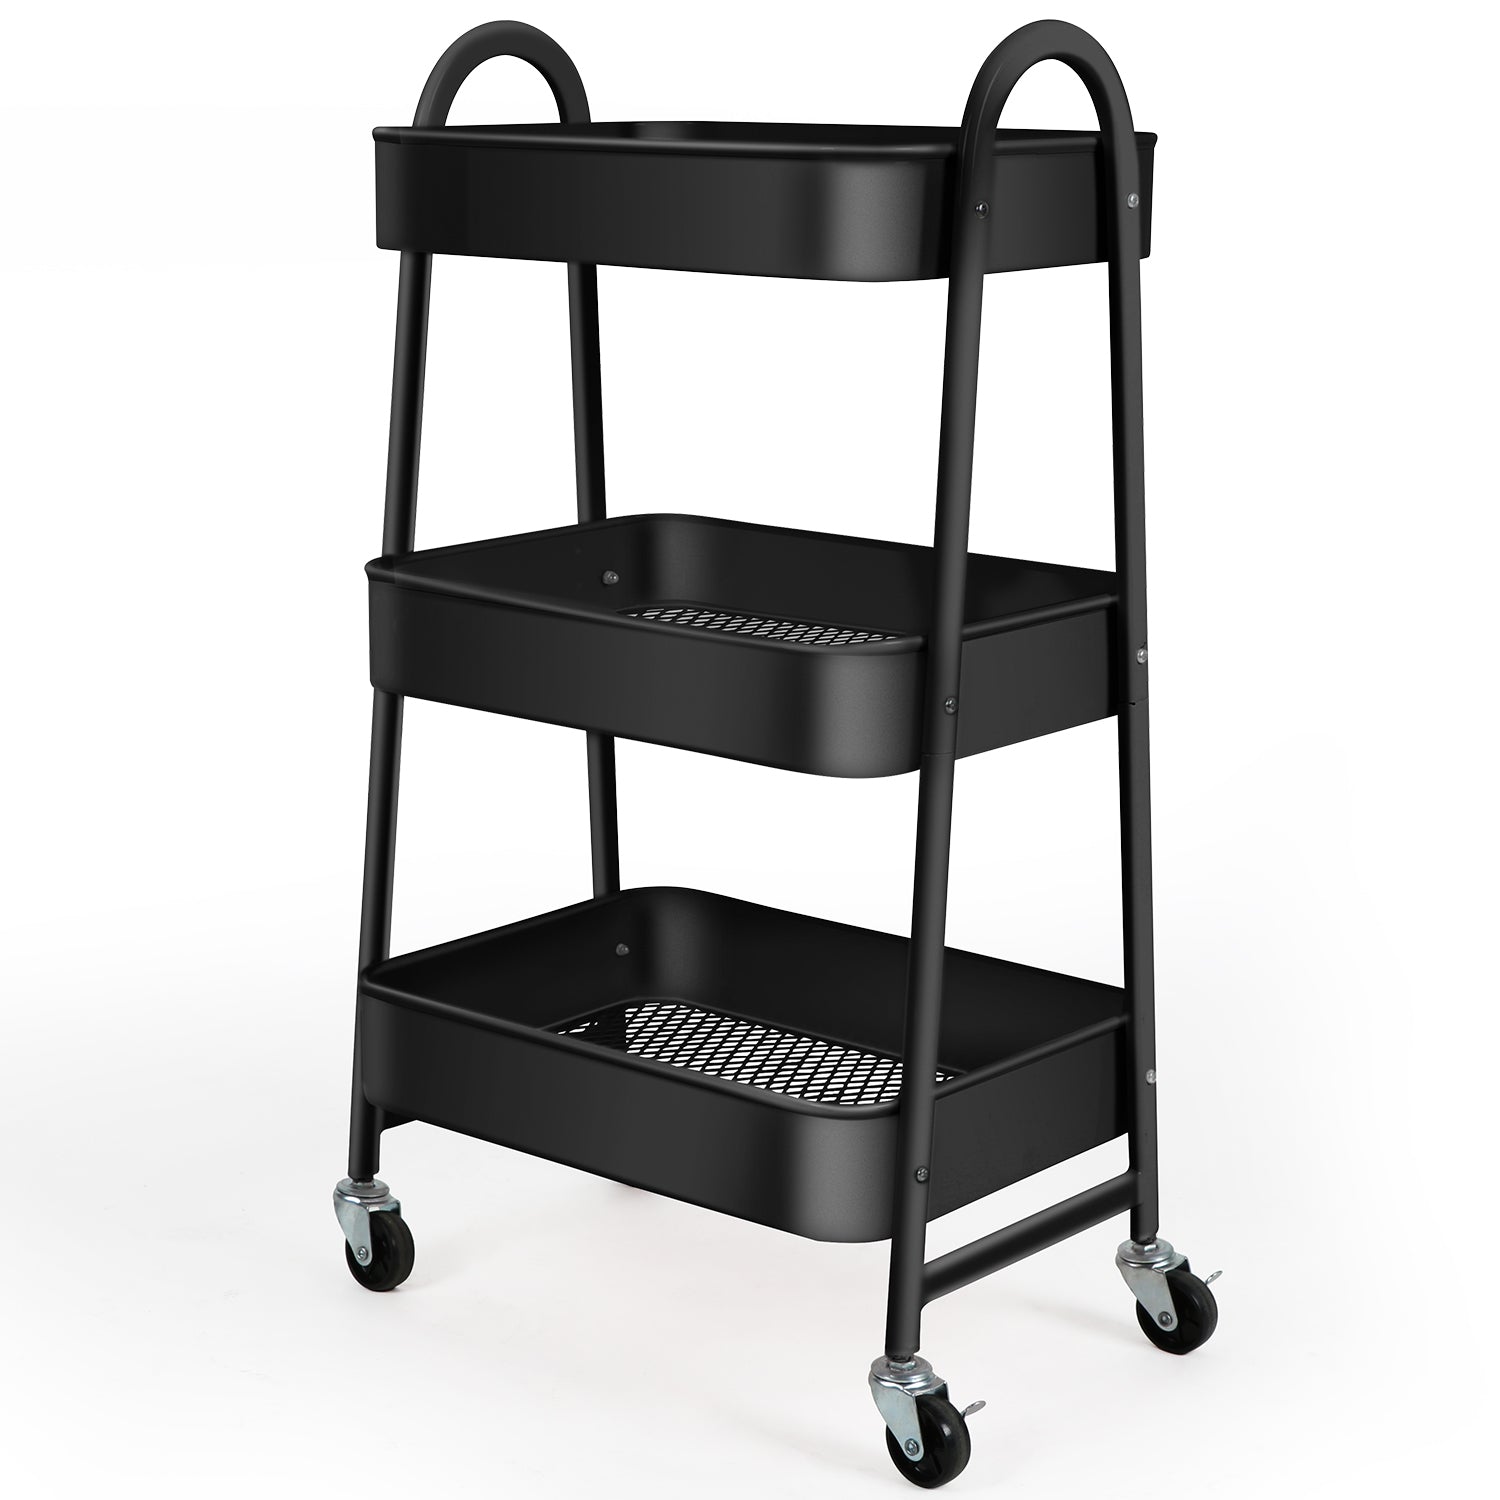 KINGRACK 3-Tier Storage Rolling Cart, Metal Utility Cart with